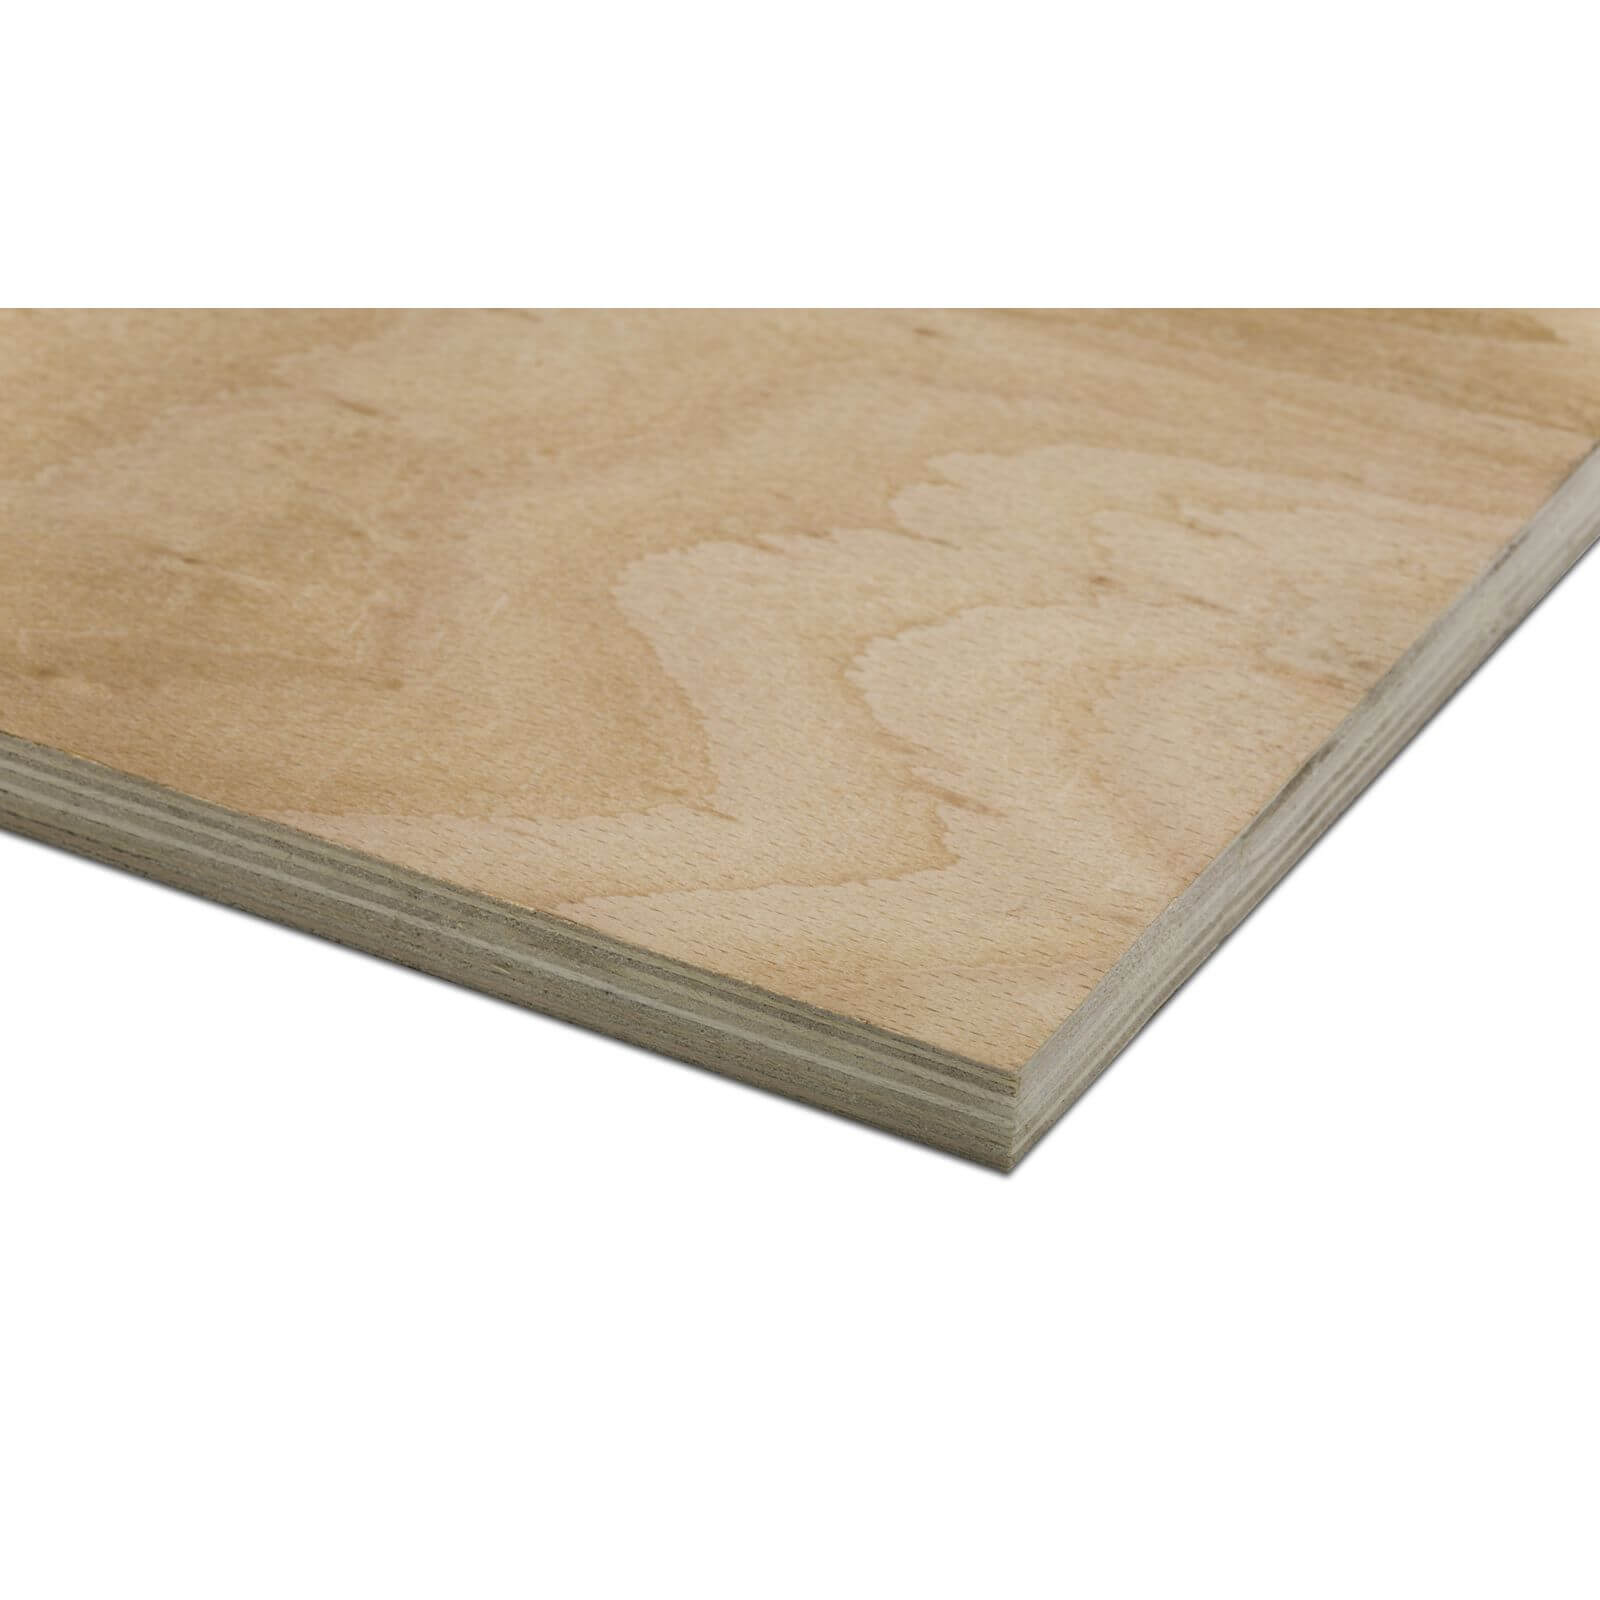 Photo of Metsa Hardwood Plywood Board 1.2m -1220 X 607 X 18mm-